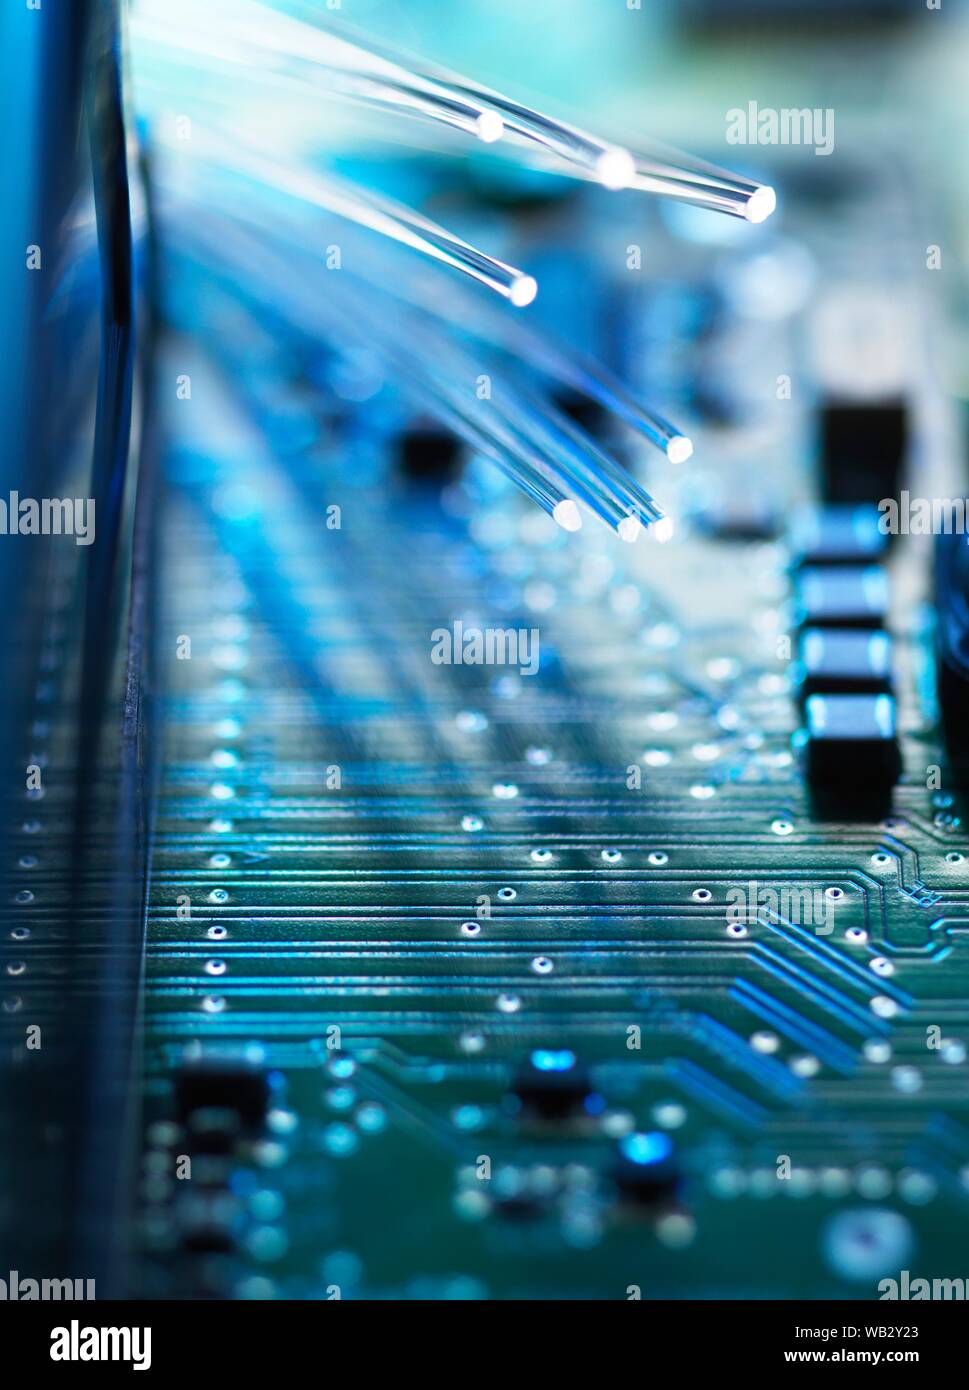 Digital communication, conceptual image. Fibre optics carrying data passing across a computer's motherboard. Stock Photo